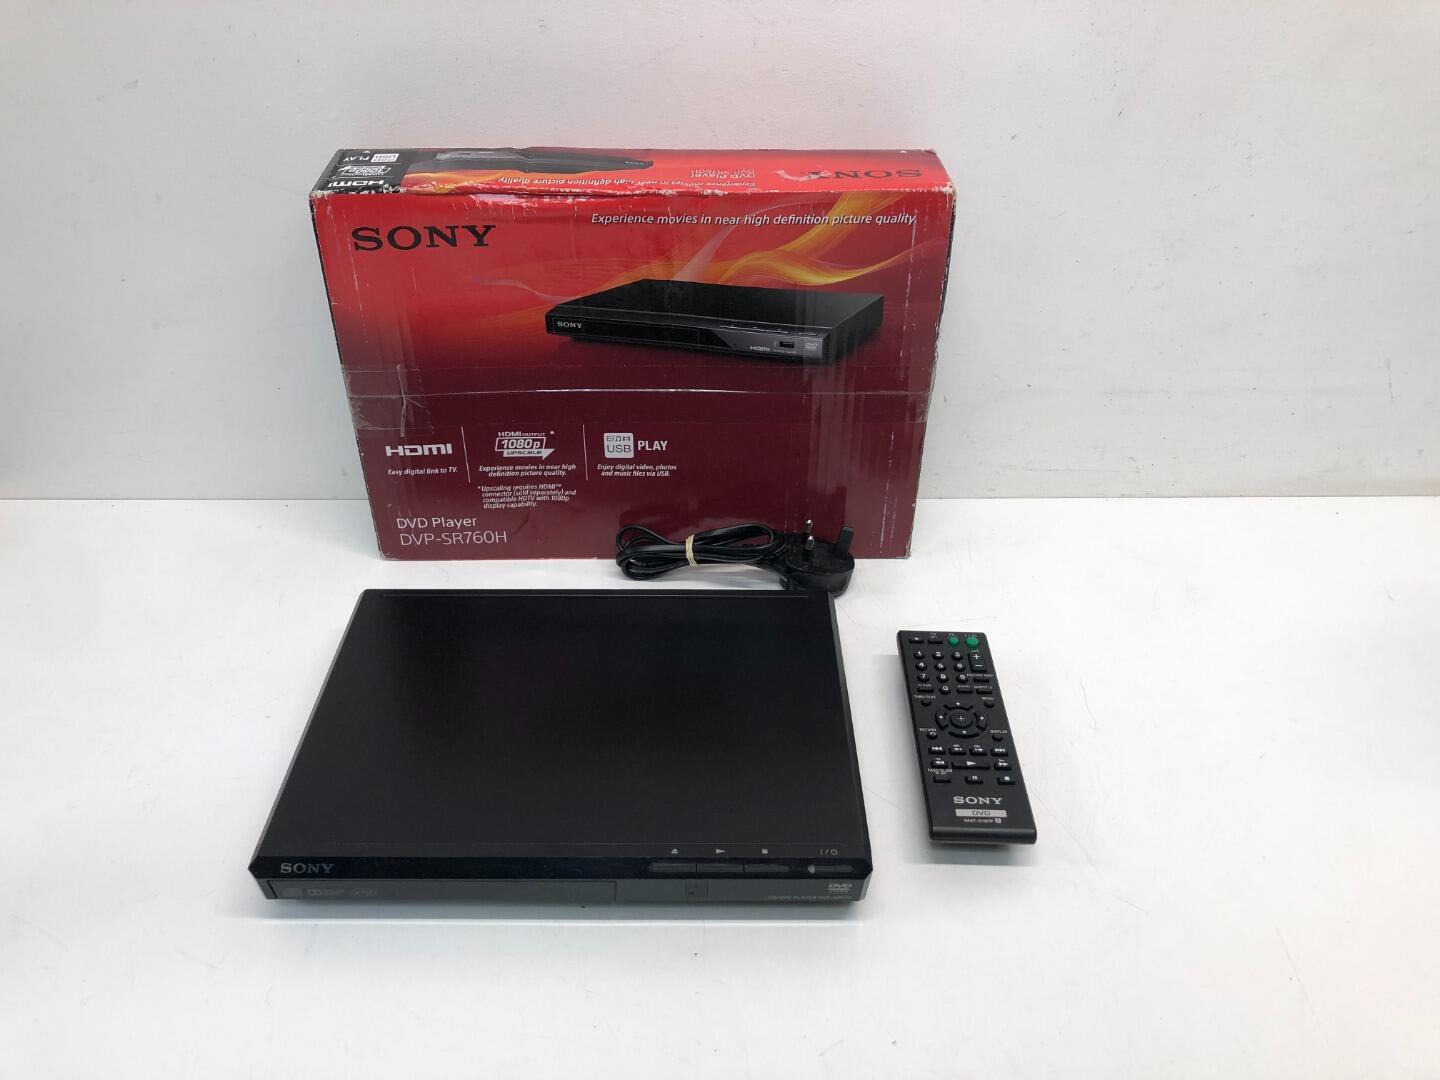 Sony DVP-SR760H Upscaling HDMI DVD Player